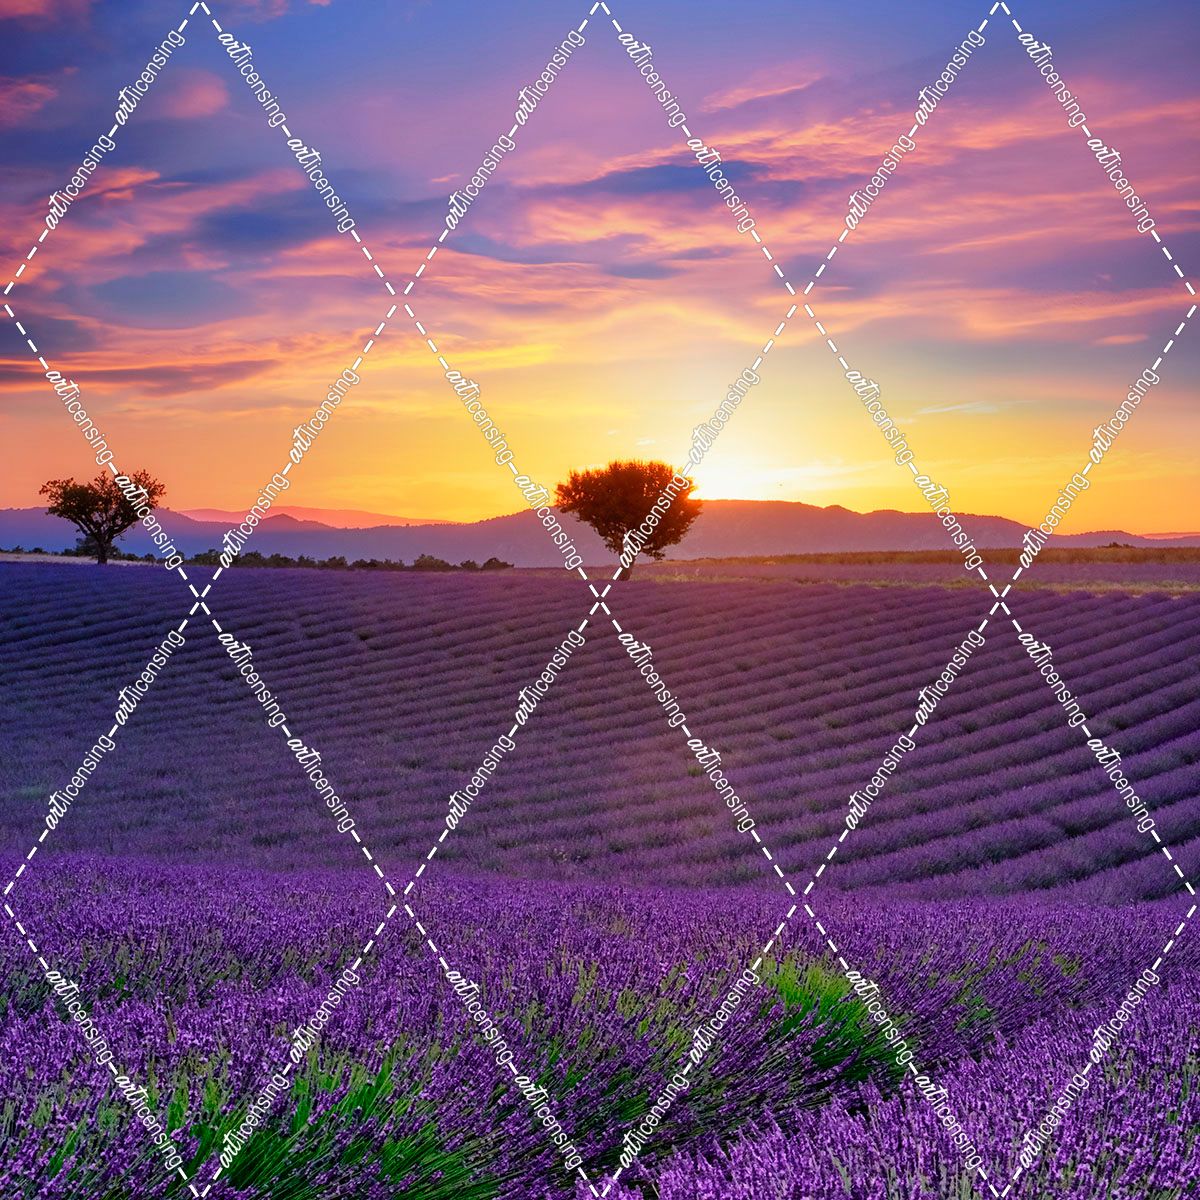 Lavender Sky Sunset